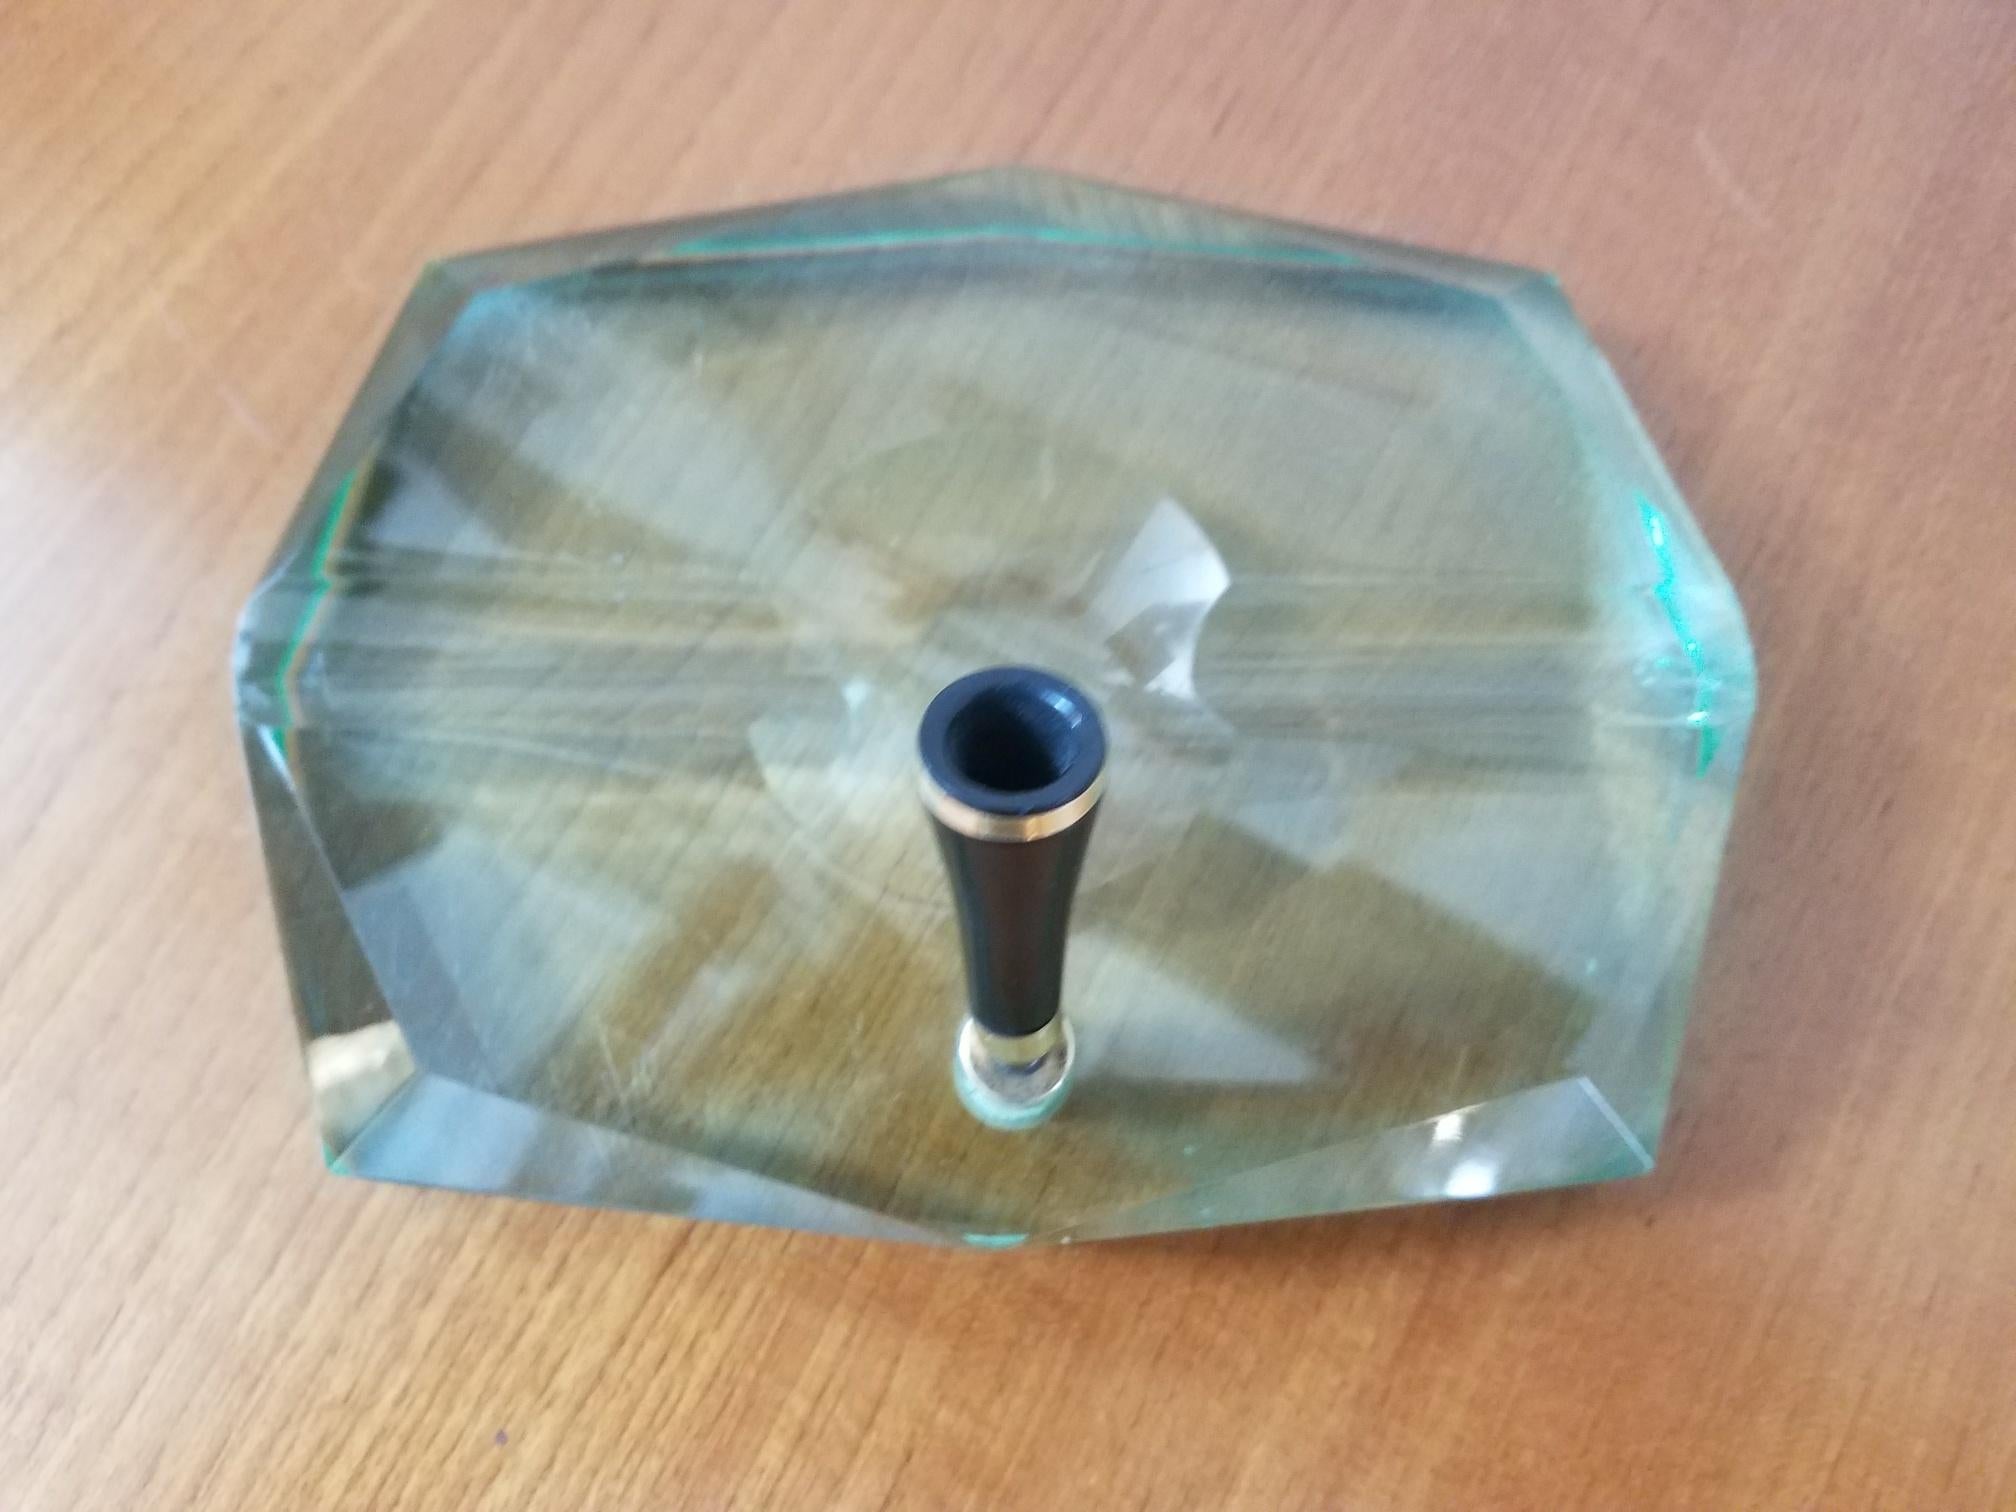 Green glass base with the black Bakelite and bras pen holder.